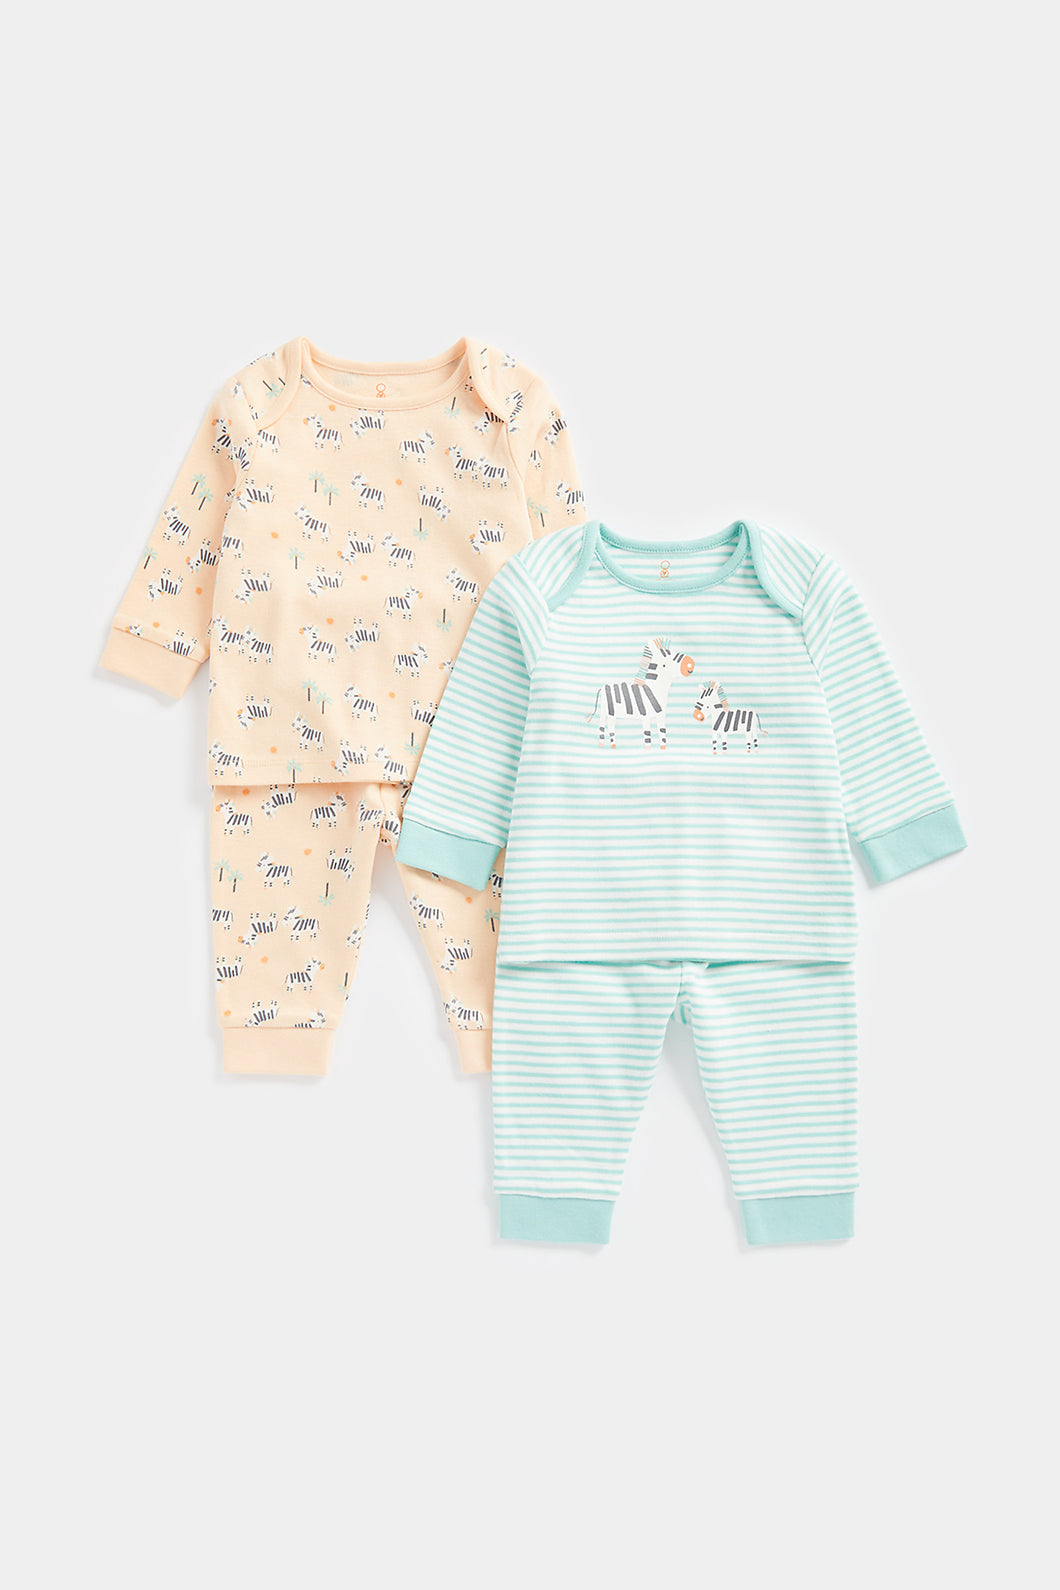 Mothercare Zebra Pyjamas - 2 Pack